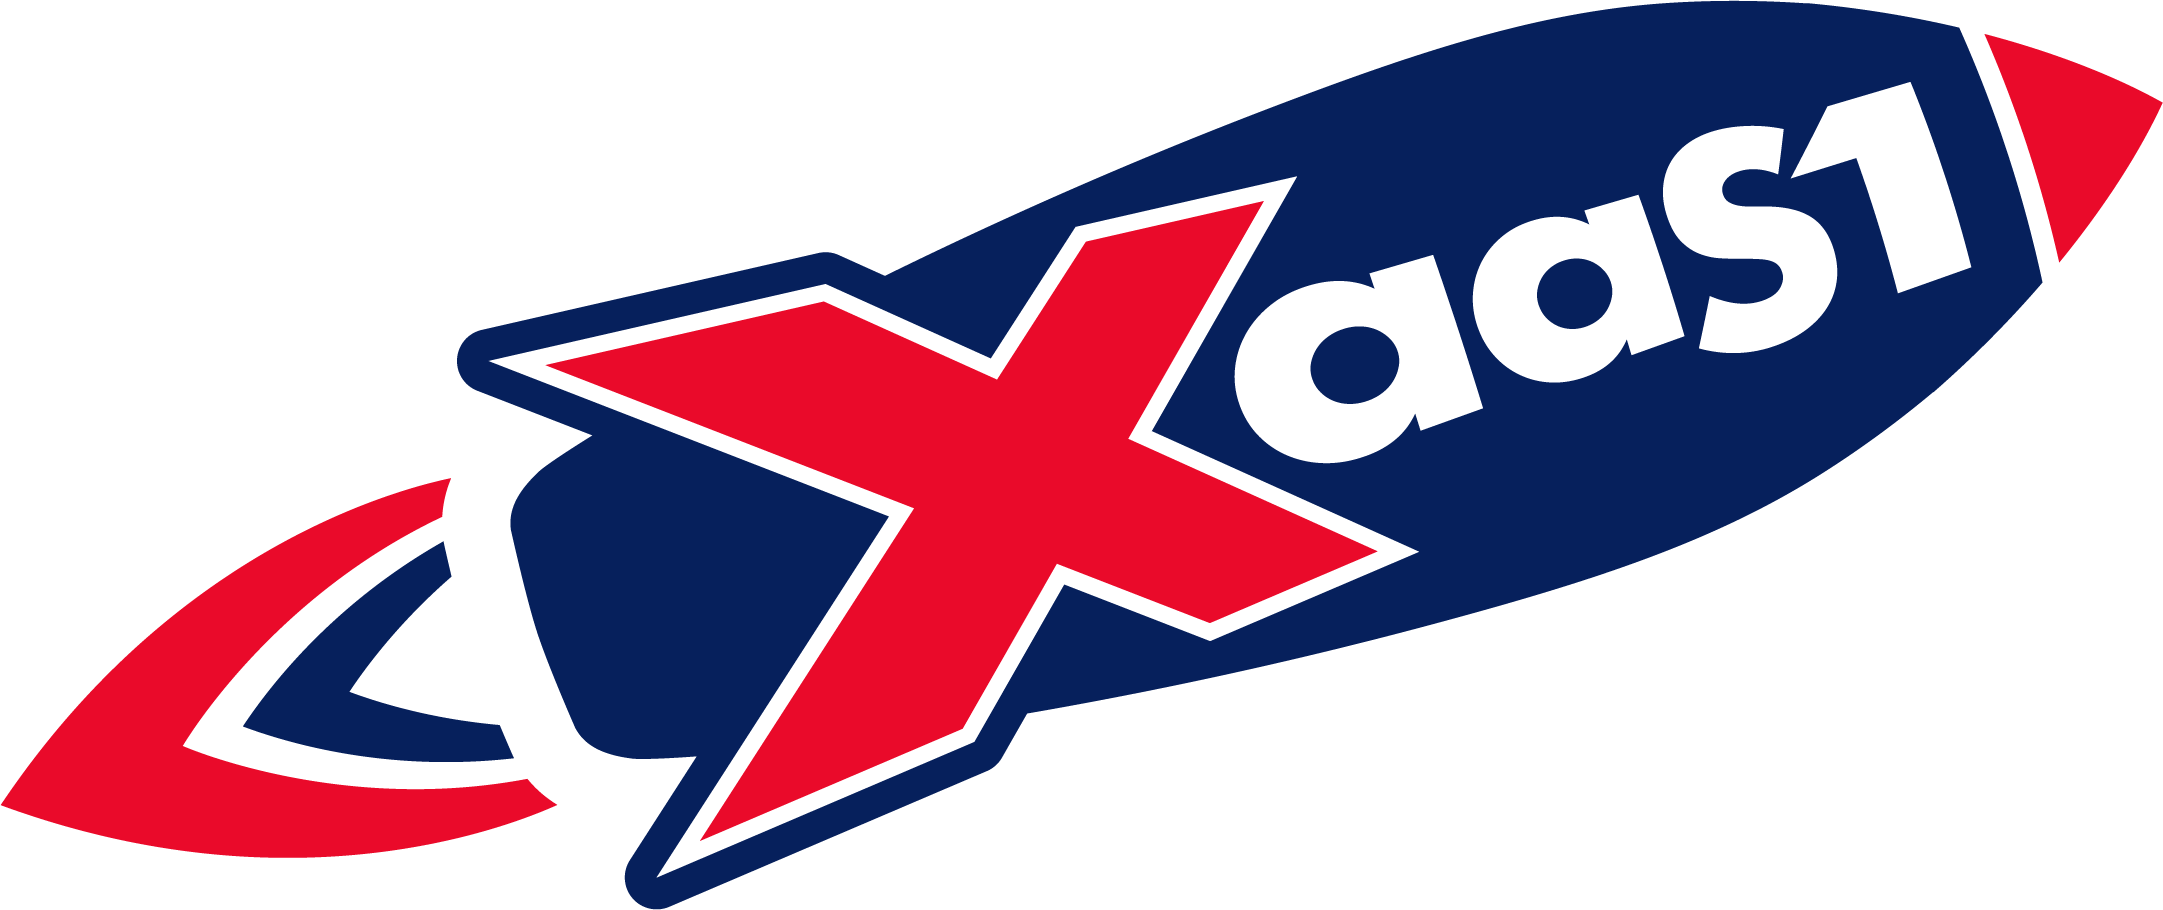 UCX Logo - XaaS1